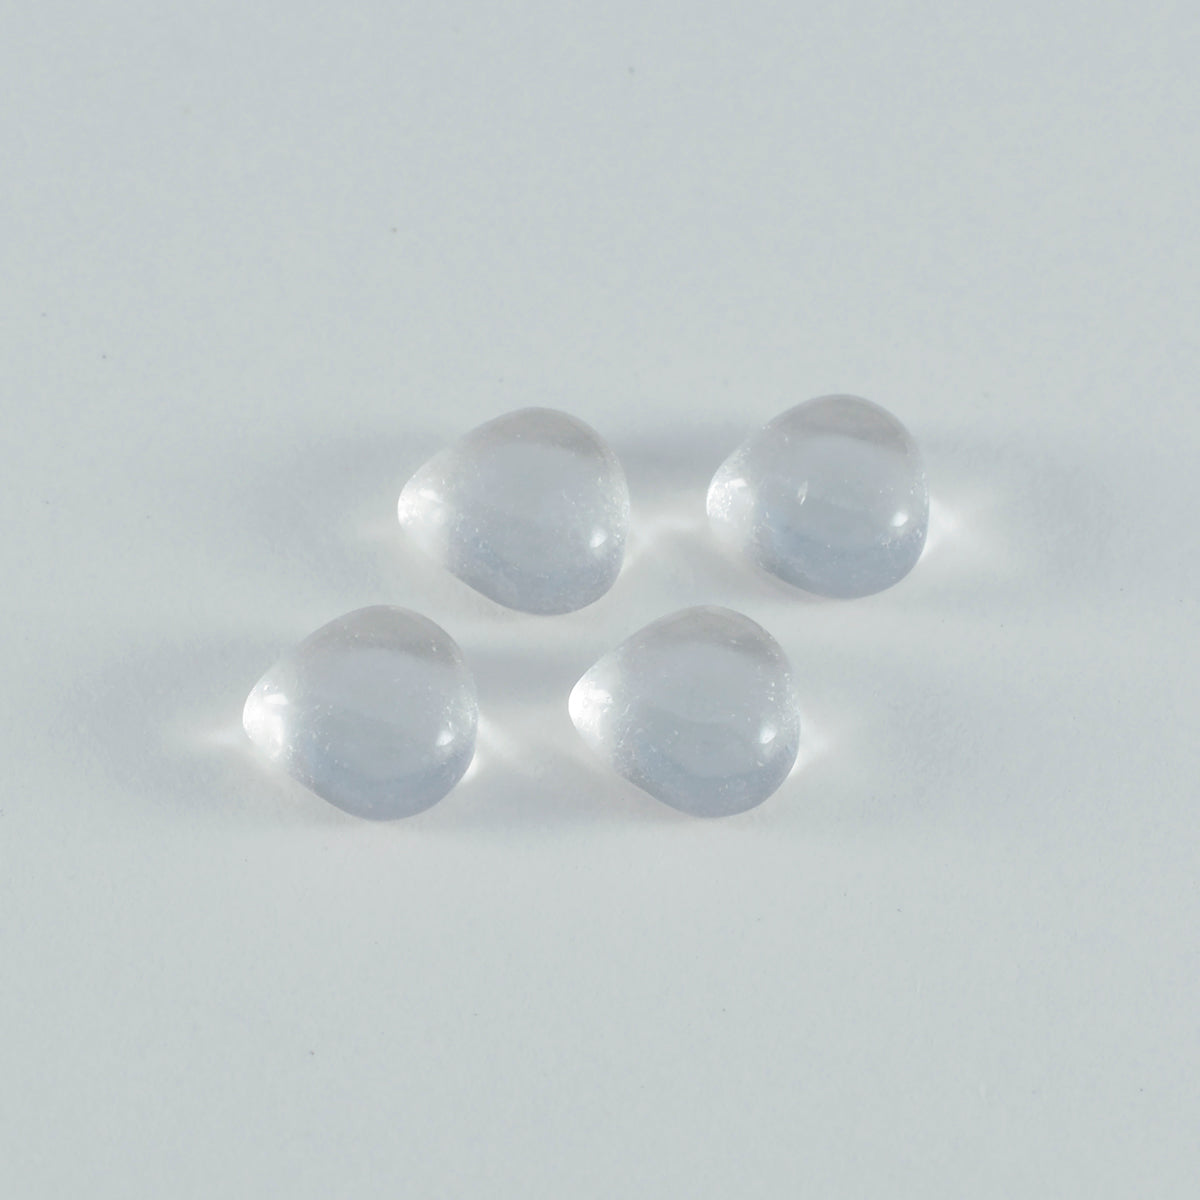 Riyogems 1PC White Crystal Quartz Cabochon 13x13 mm Heart Shape A+ Quality Stone